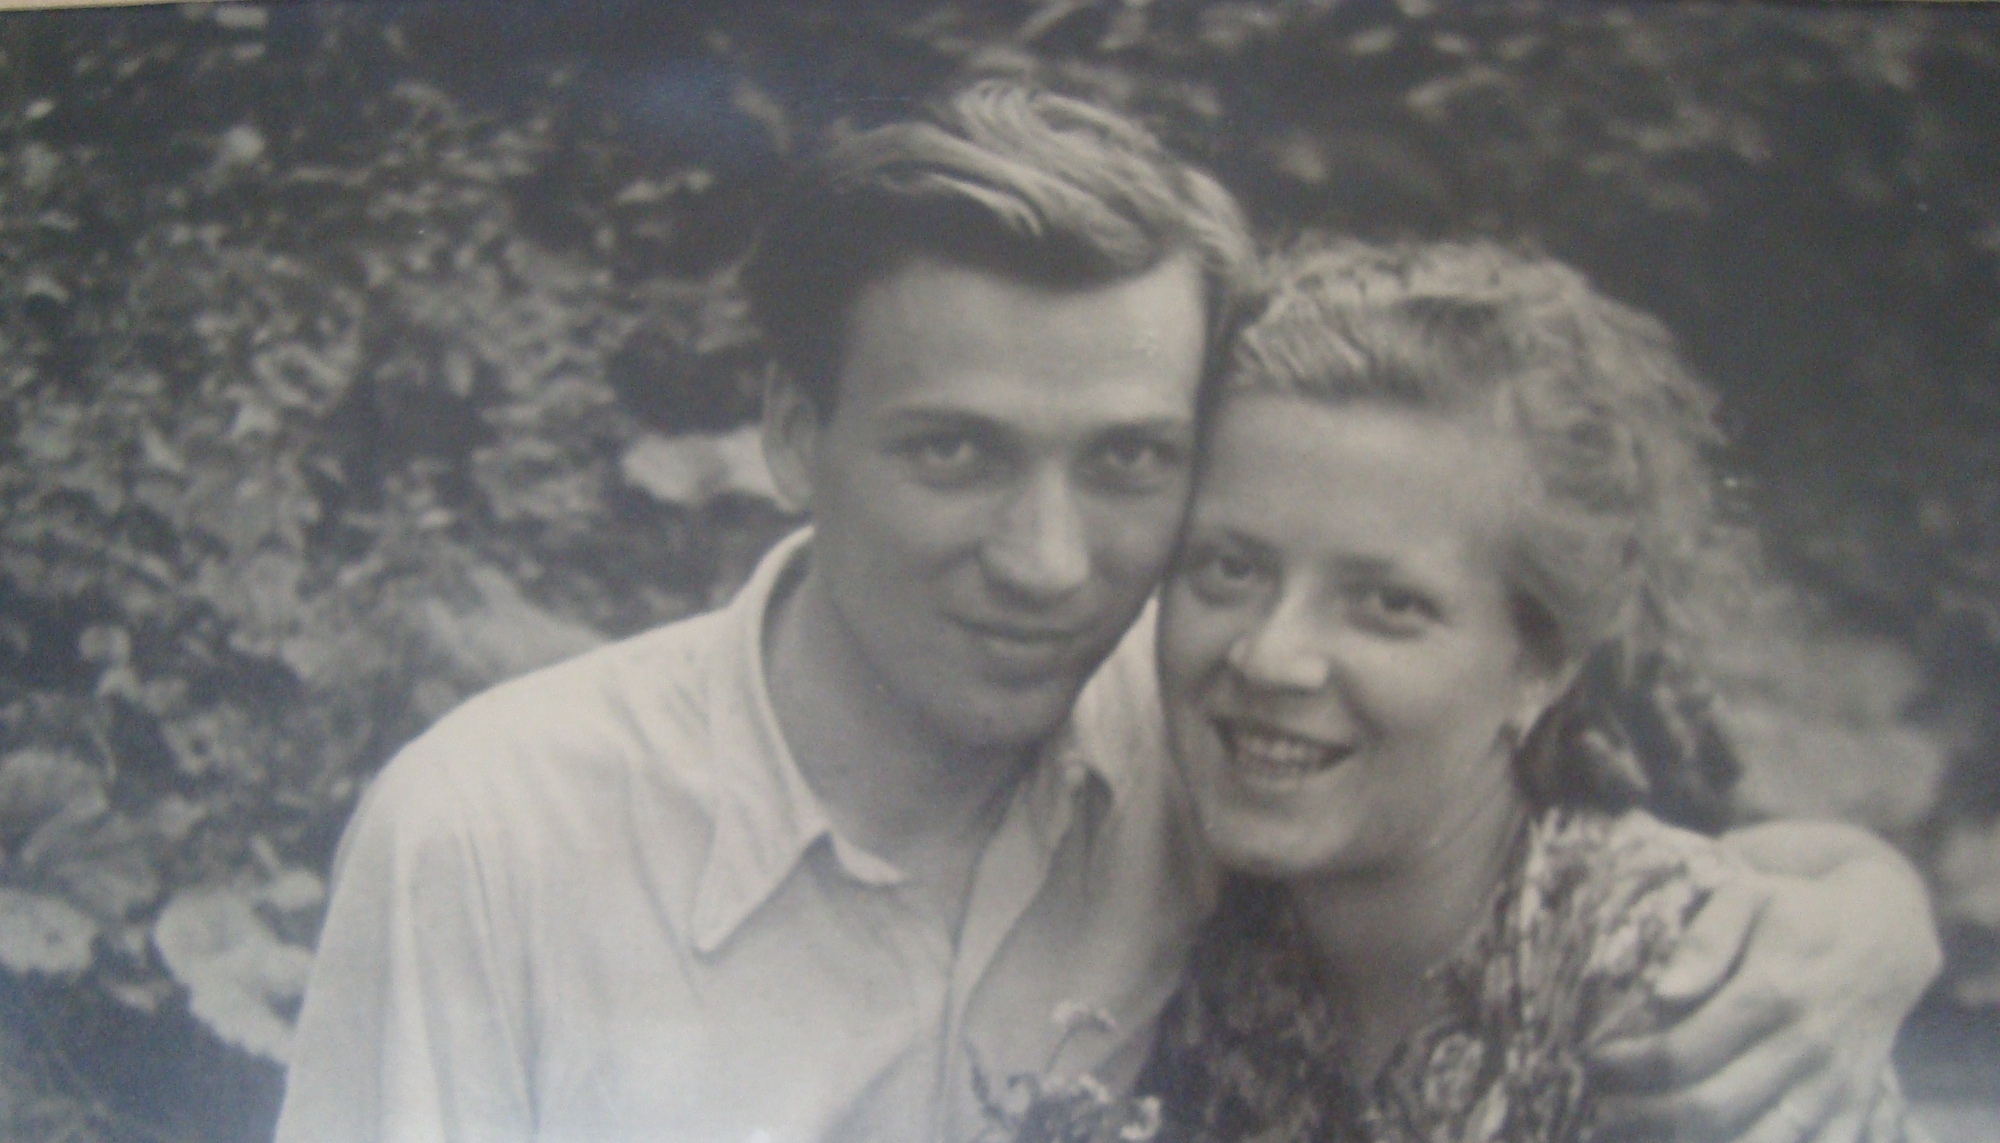 Jaroslav Franc s manželkou